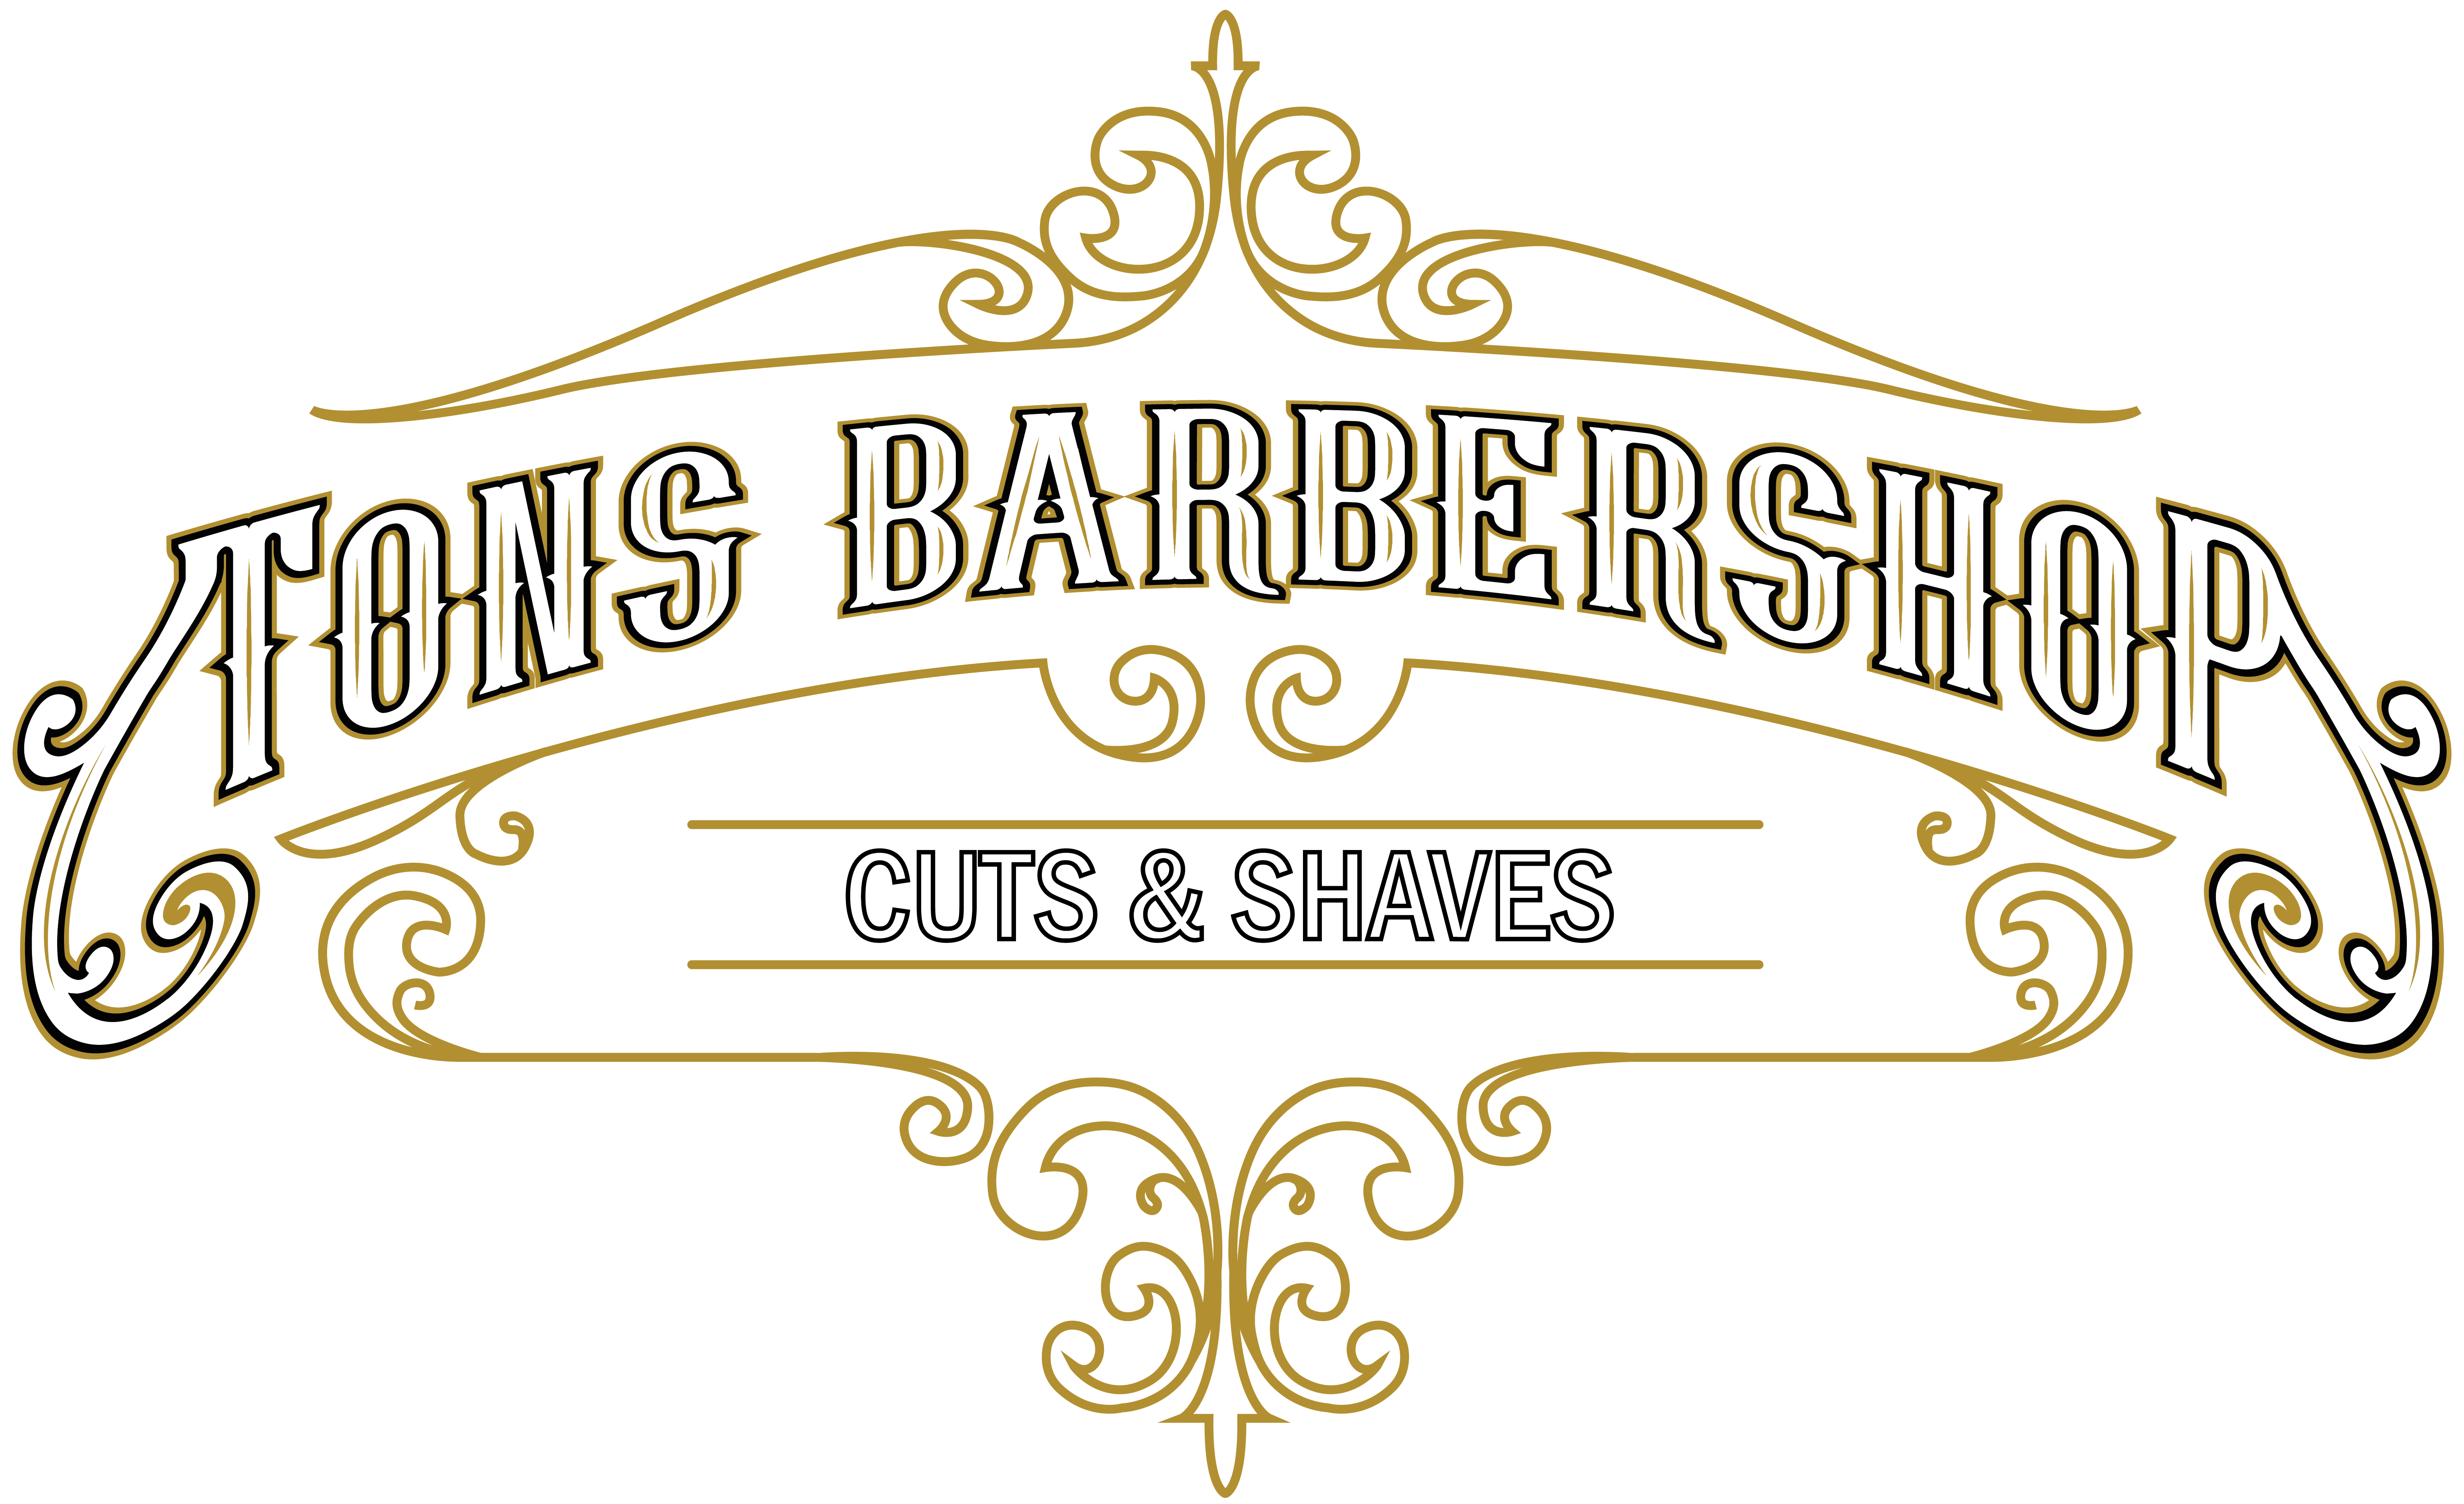 Ton's Barbershop